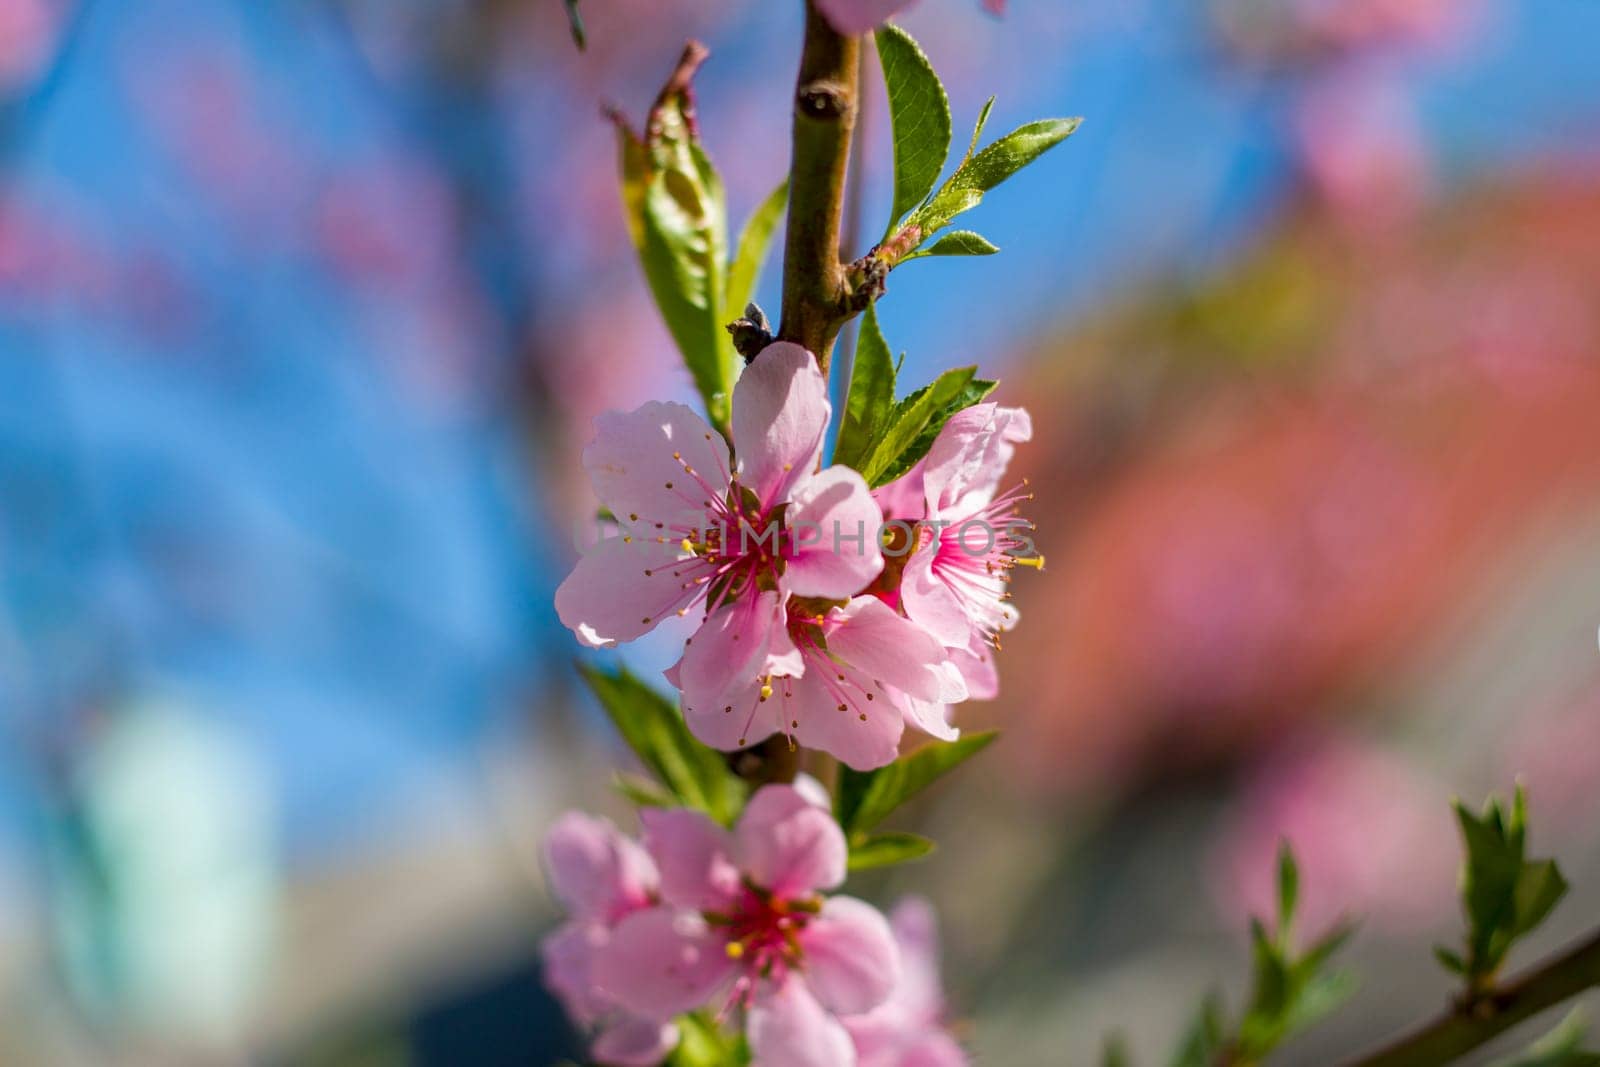 Nectarine peach spring blossom branch. Agriculture beautiful season farming springtime landscape